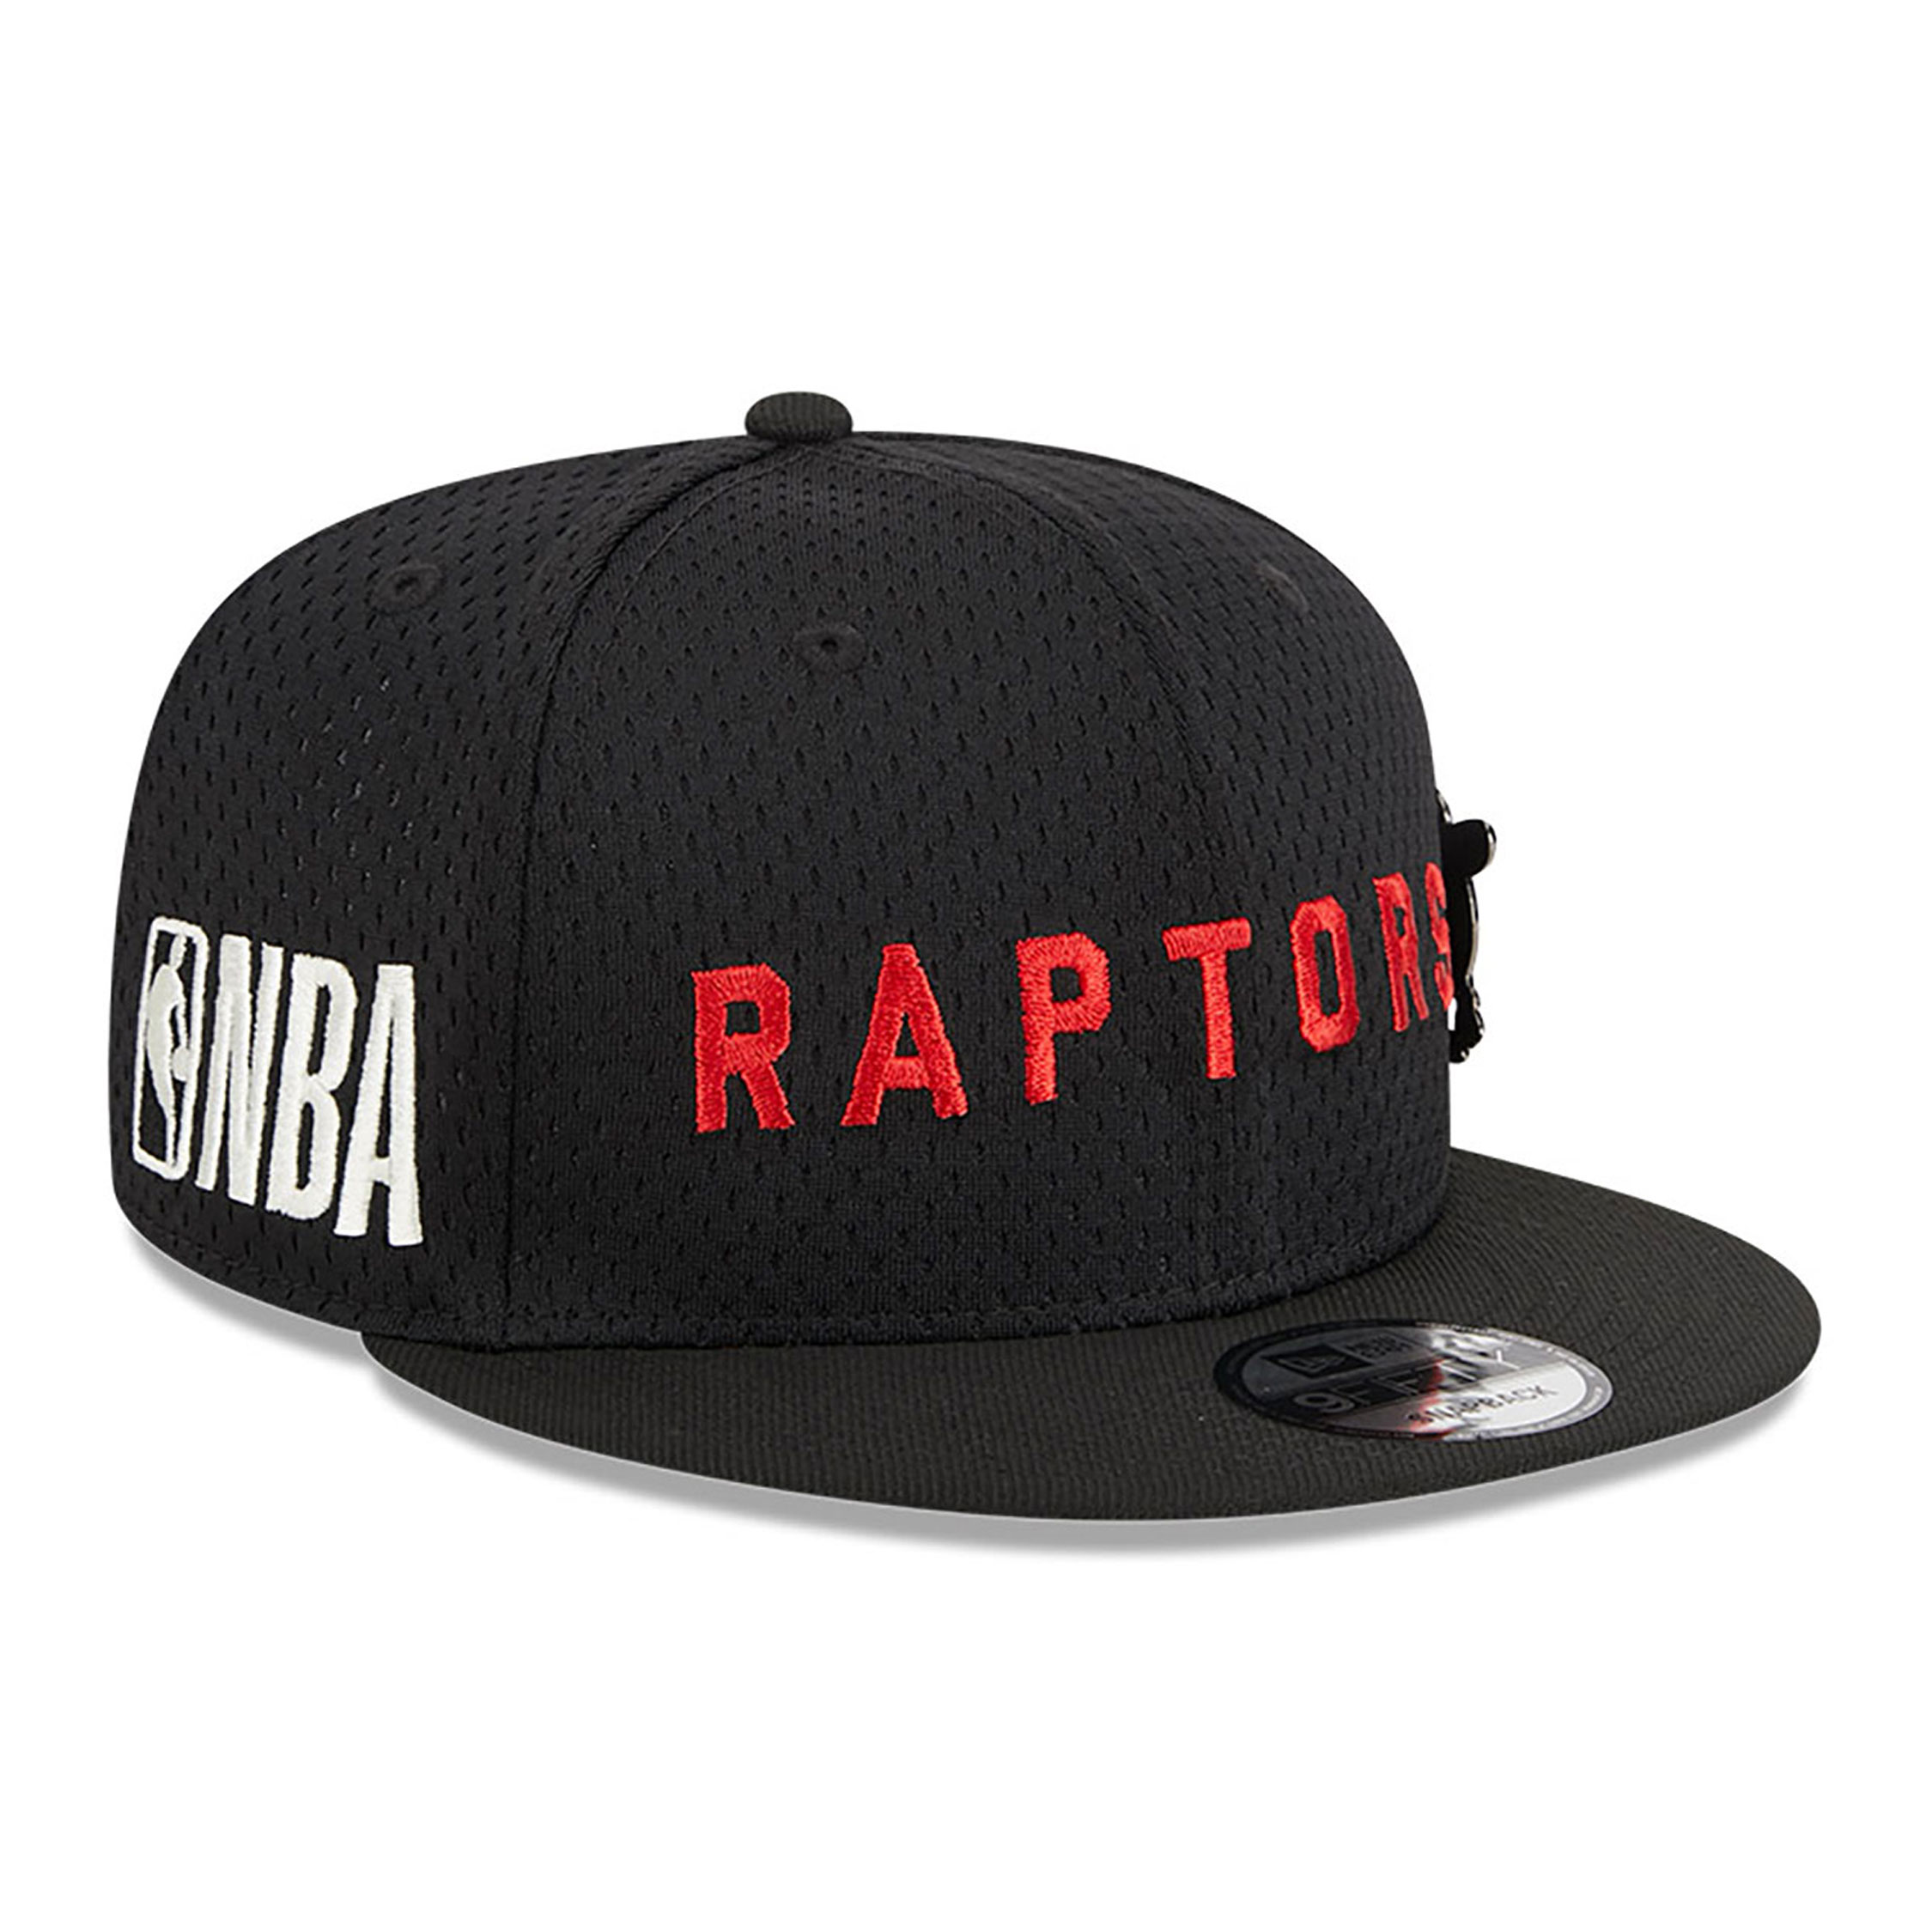 Toronto Raptors Post-Up Pin Black 9FIFTY Snapback Cap